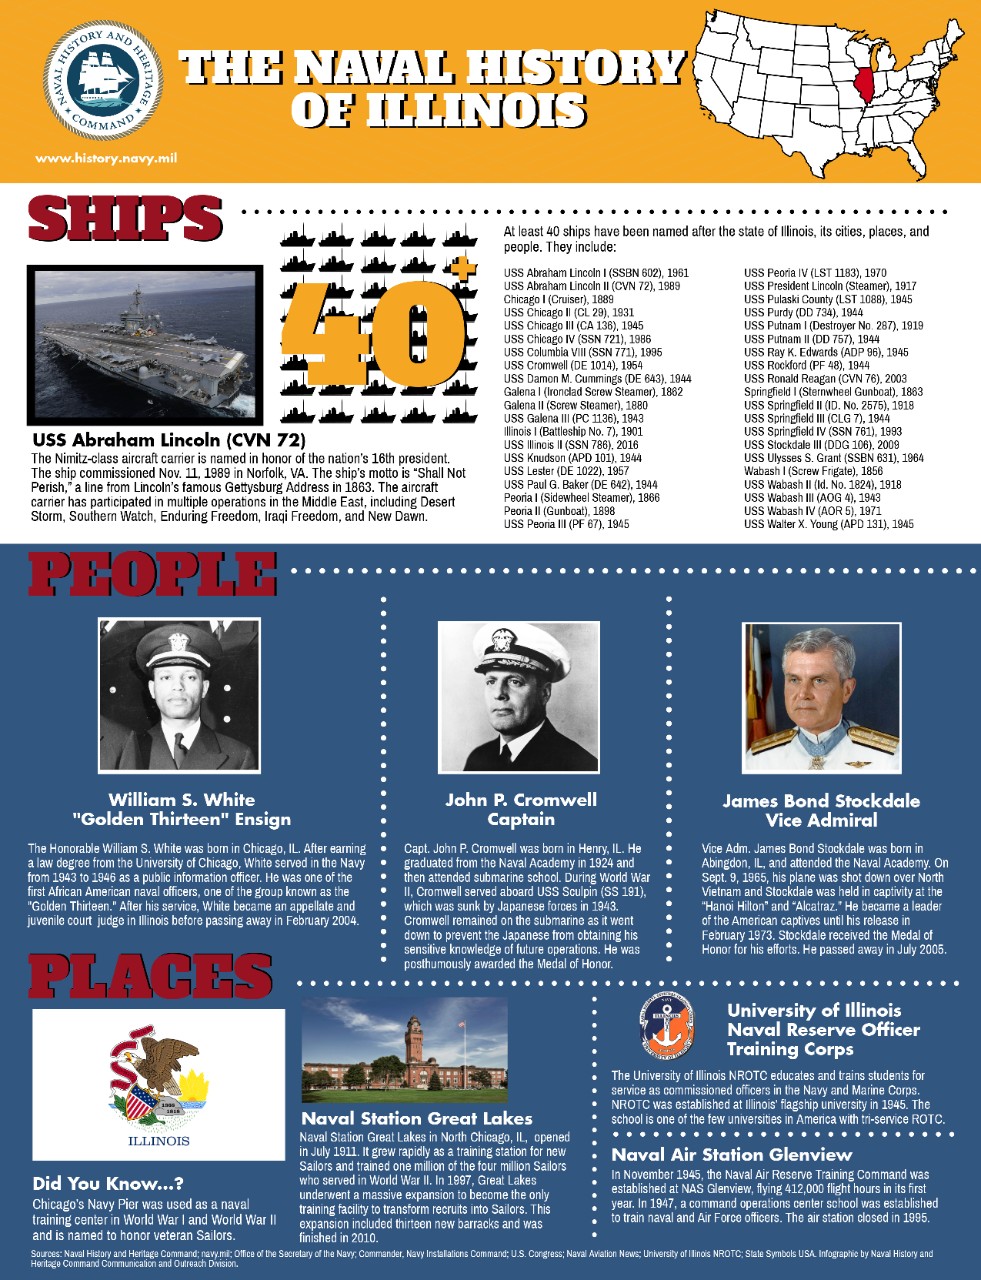 Illinois's Naval History